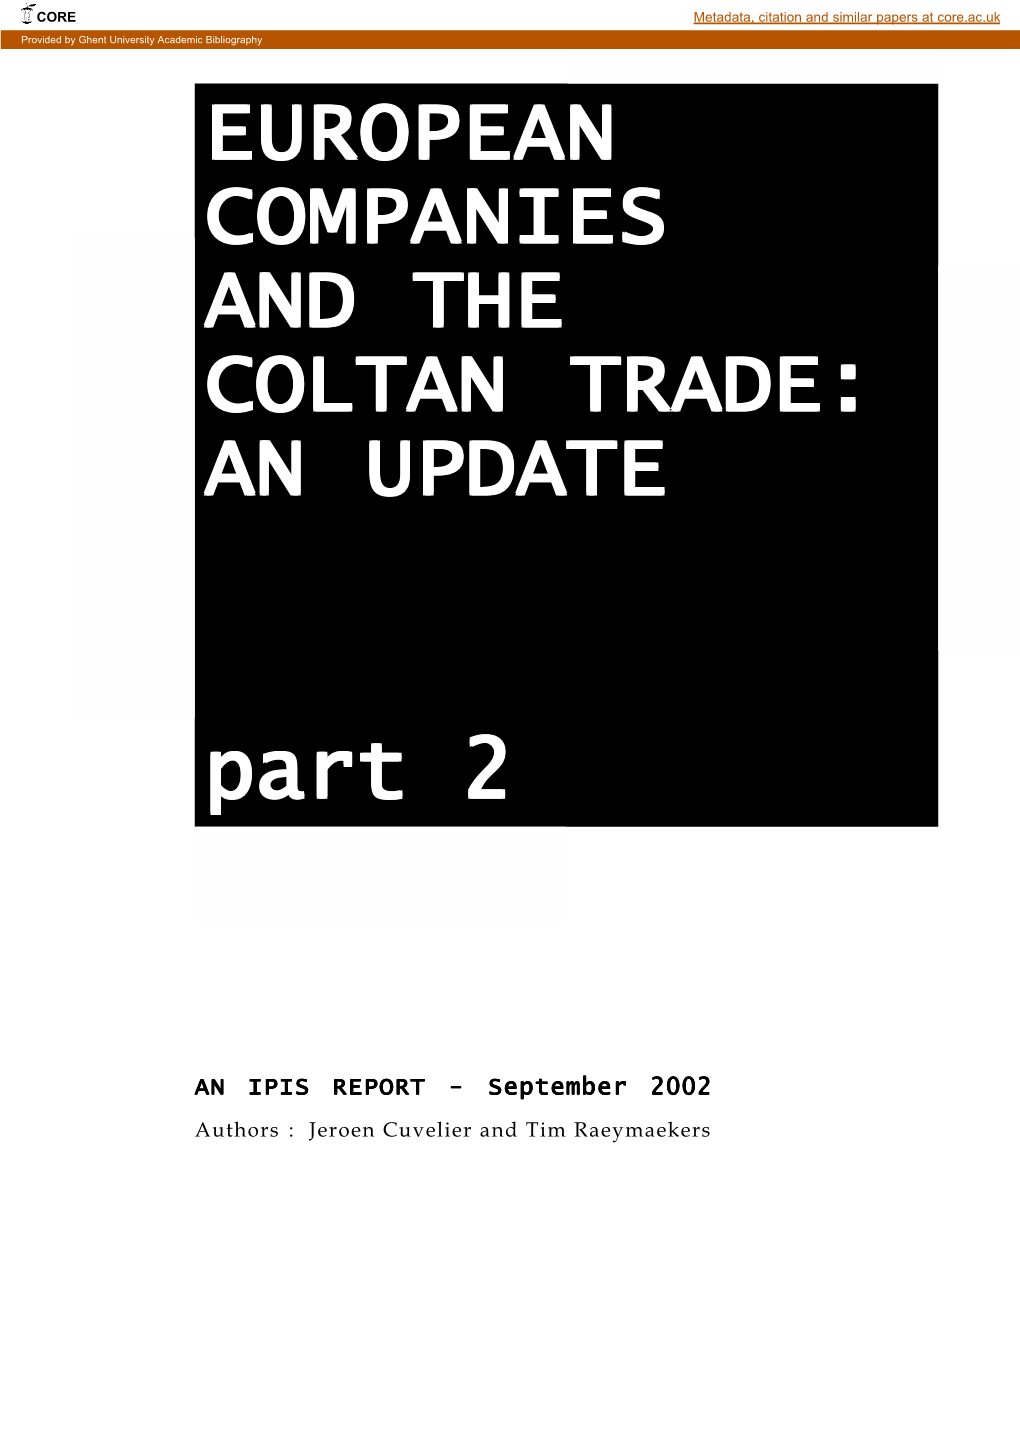 Coltan Trade:Trade: Anan Updateupdate